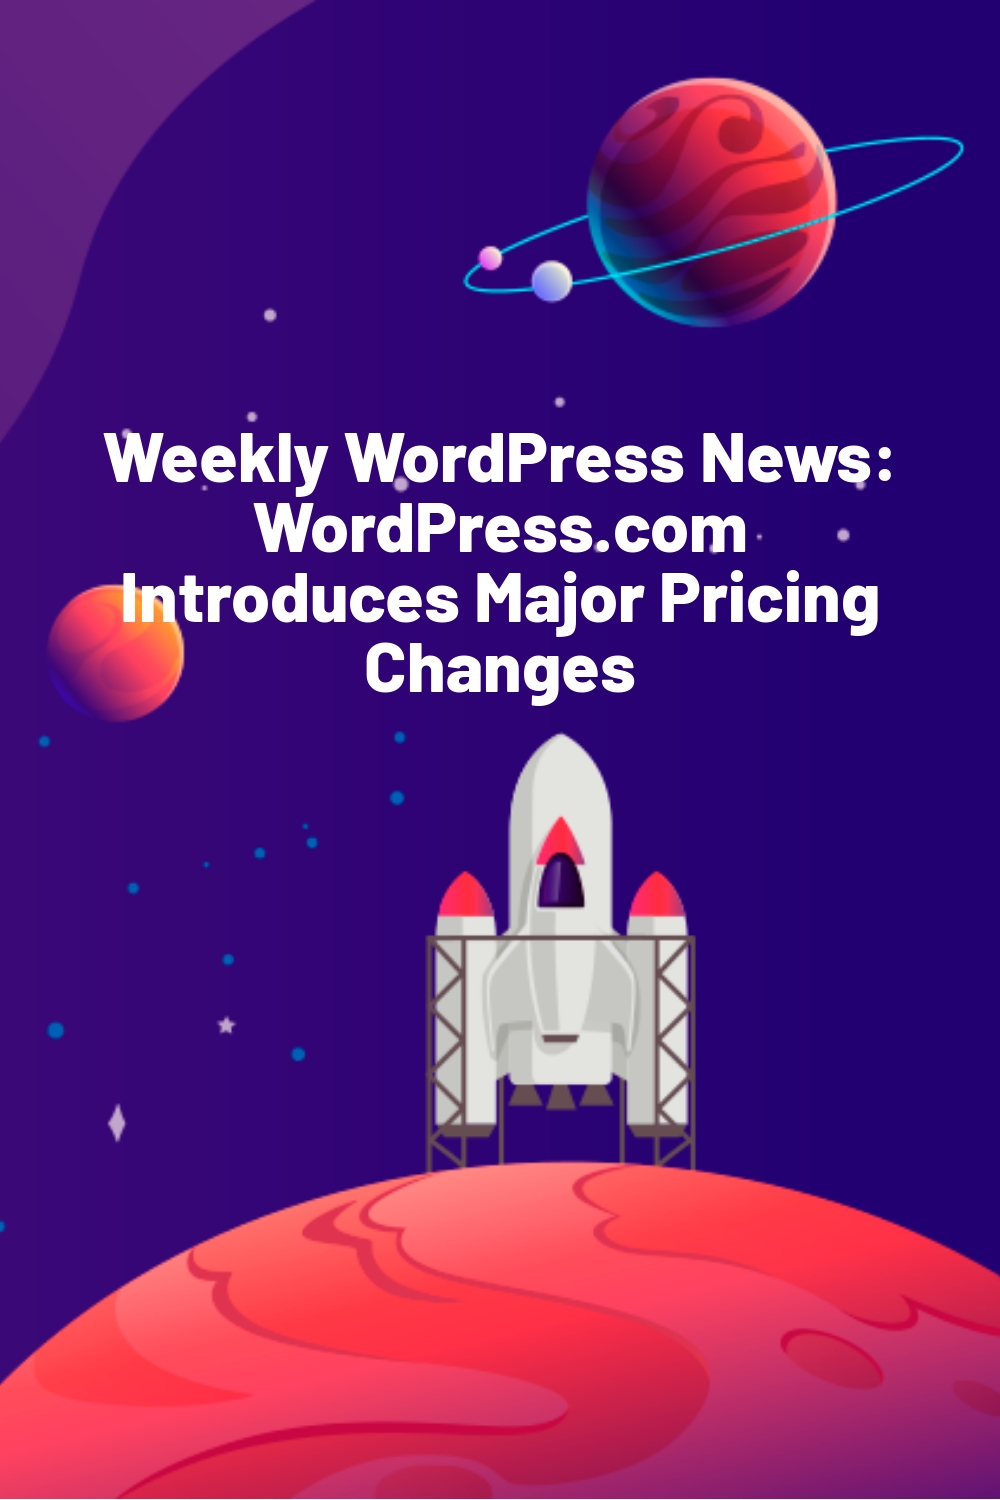 Weekly WordPress News: WordPress.com Introduces Major Pricing Changes